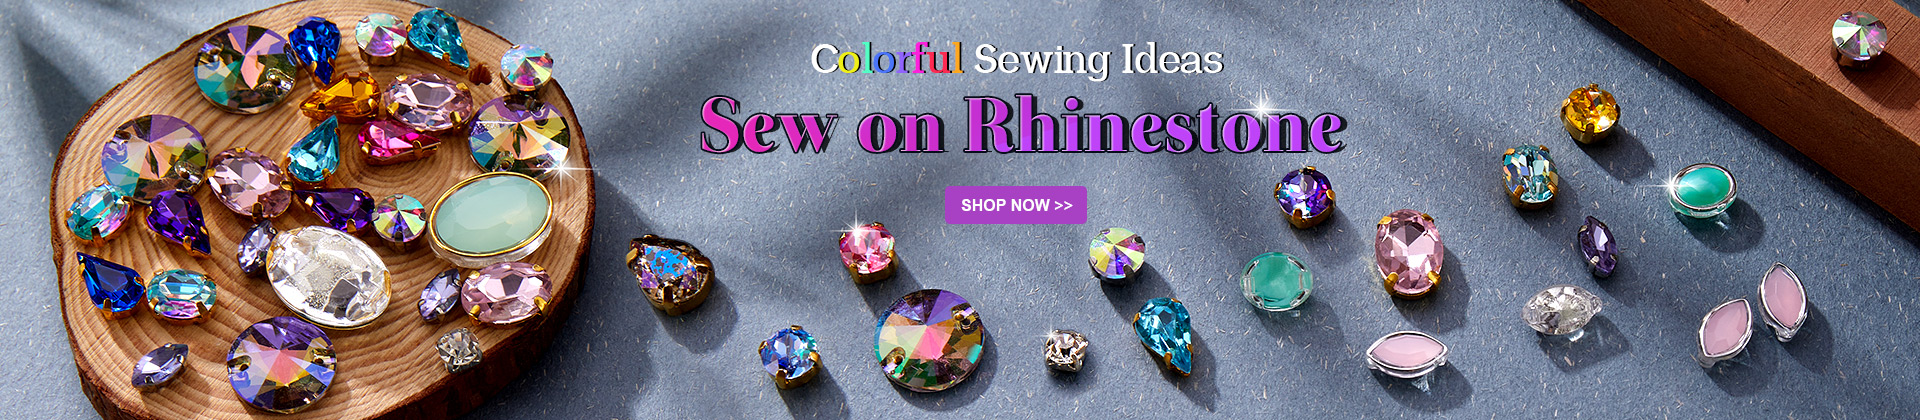 Colorful Sewing Ideas Sew on Rhinestone